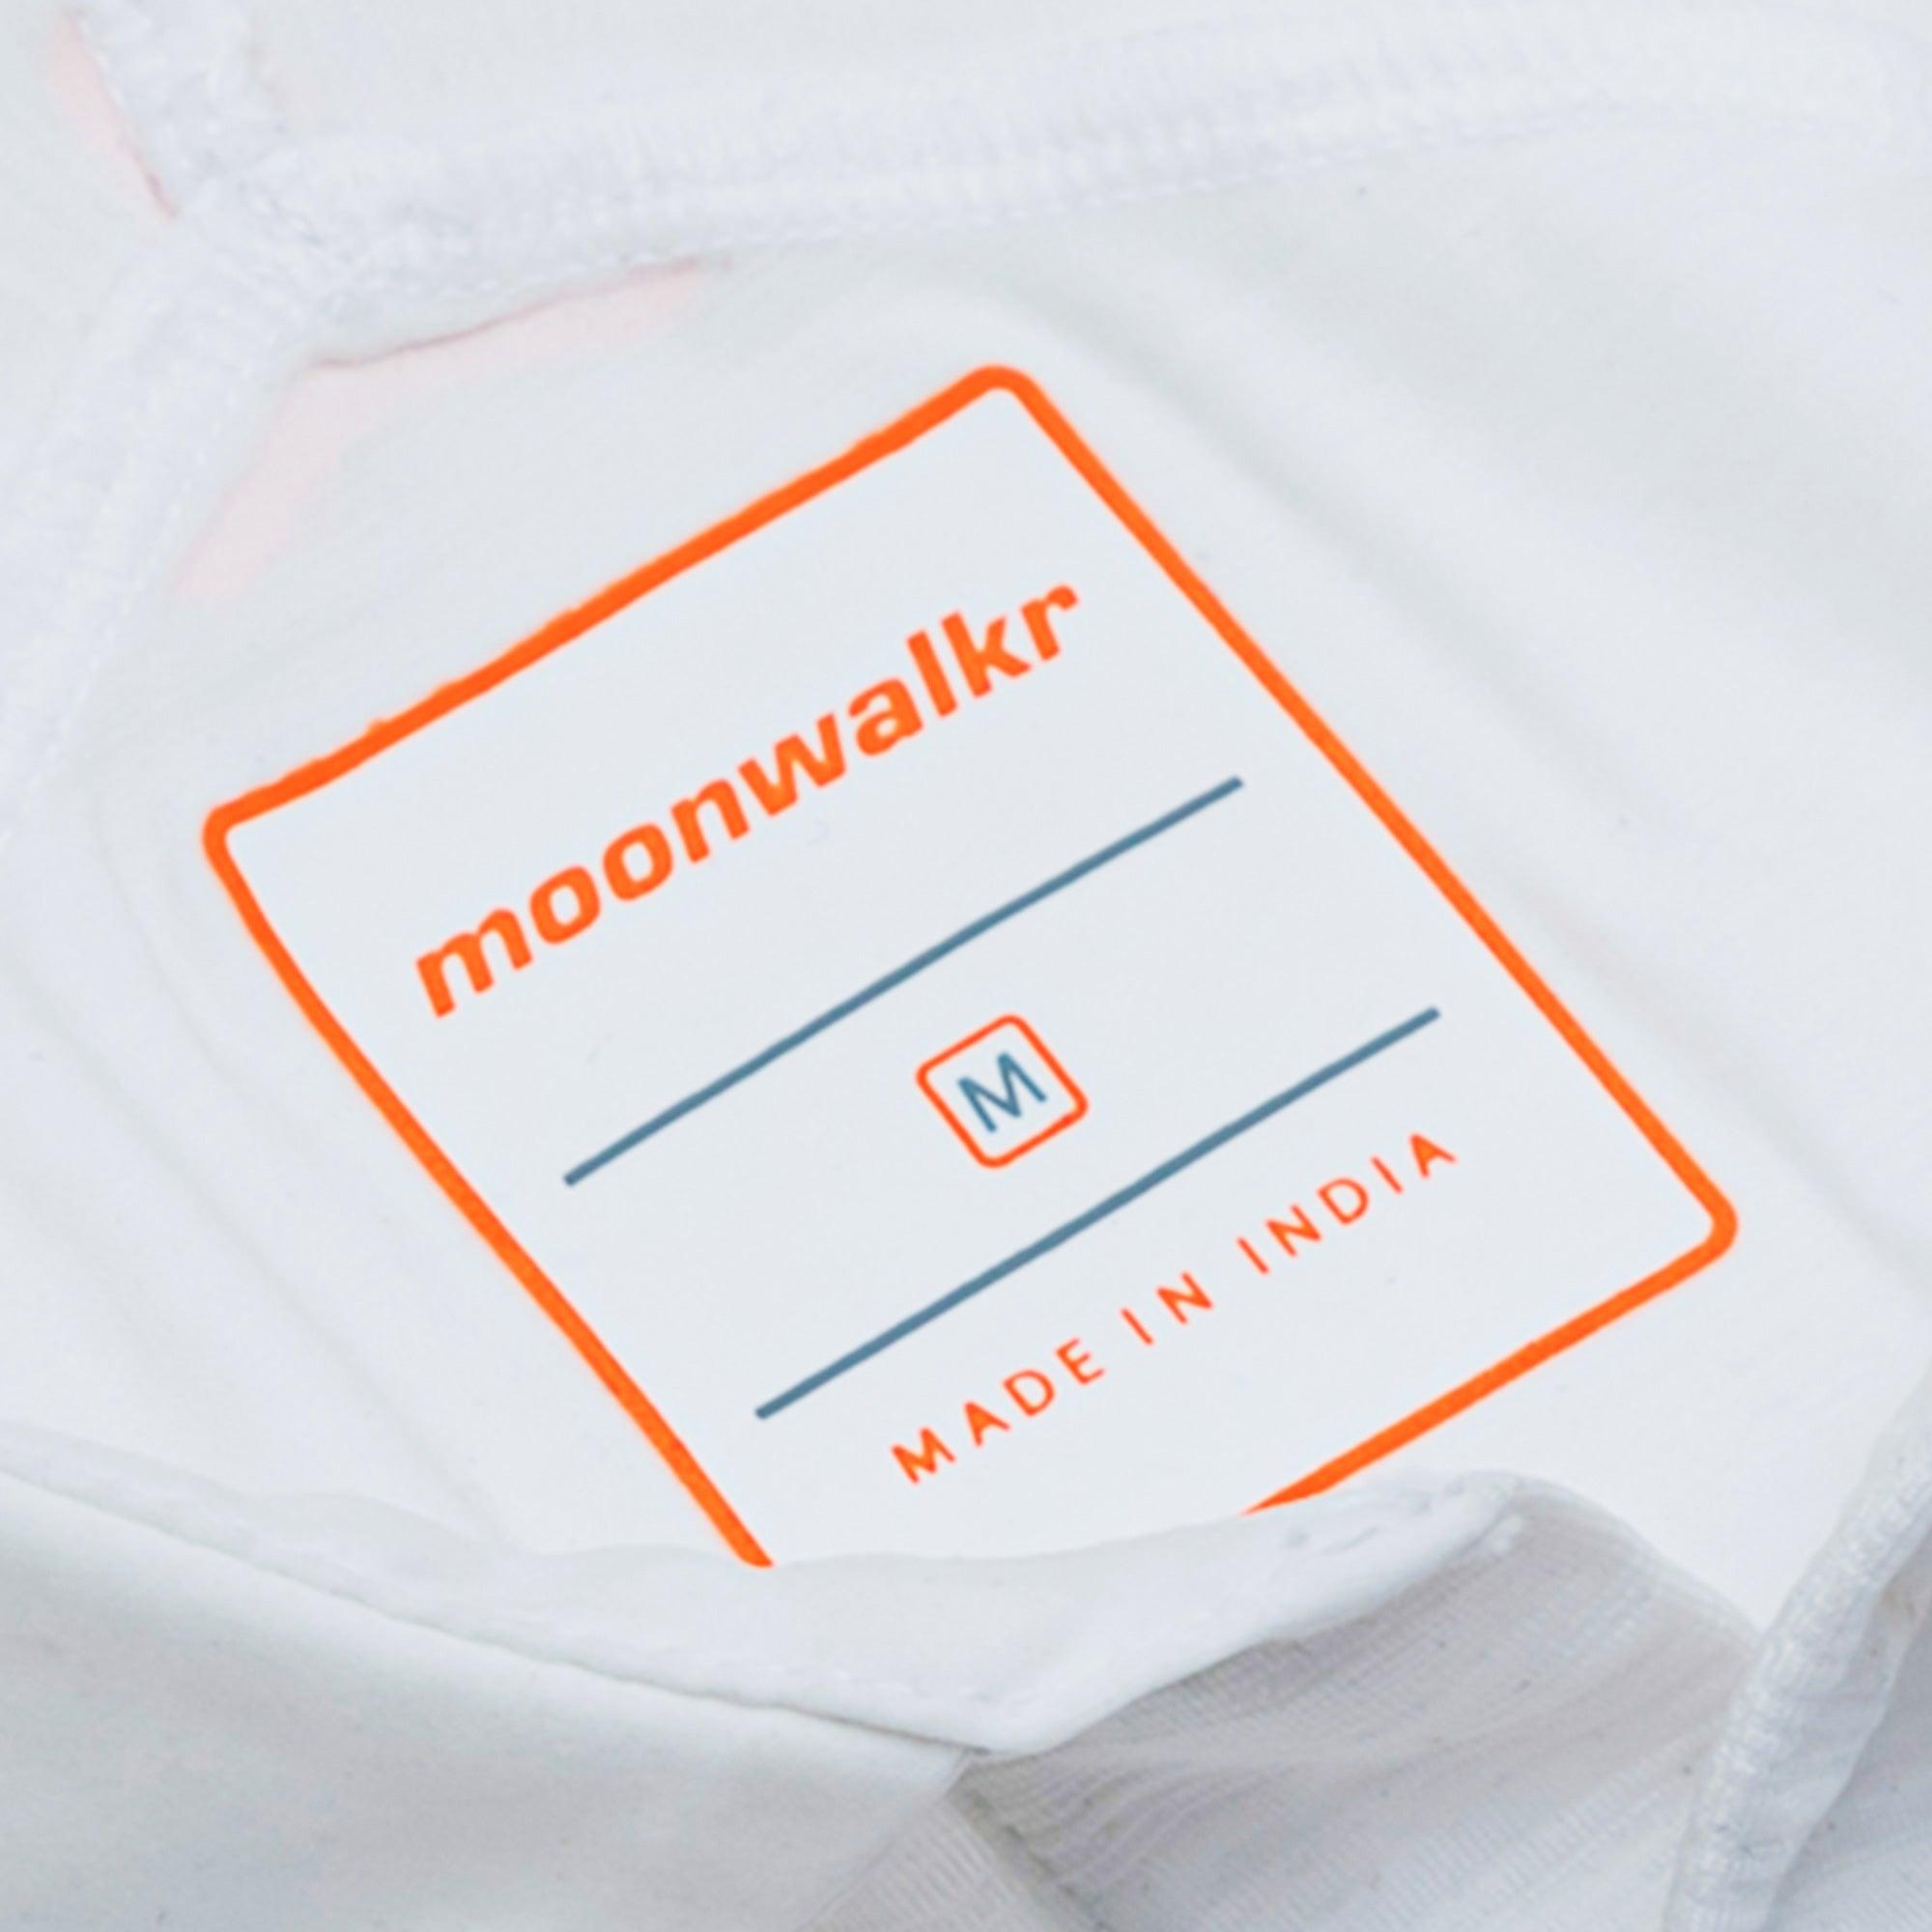 moonwalkr T-shirt